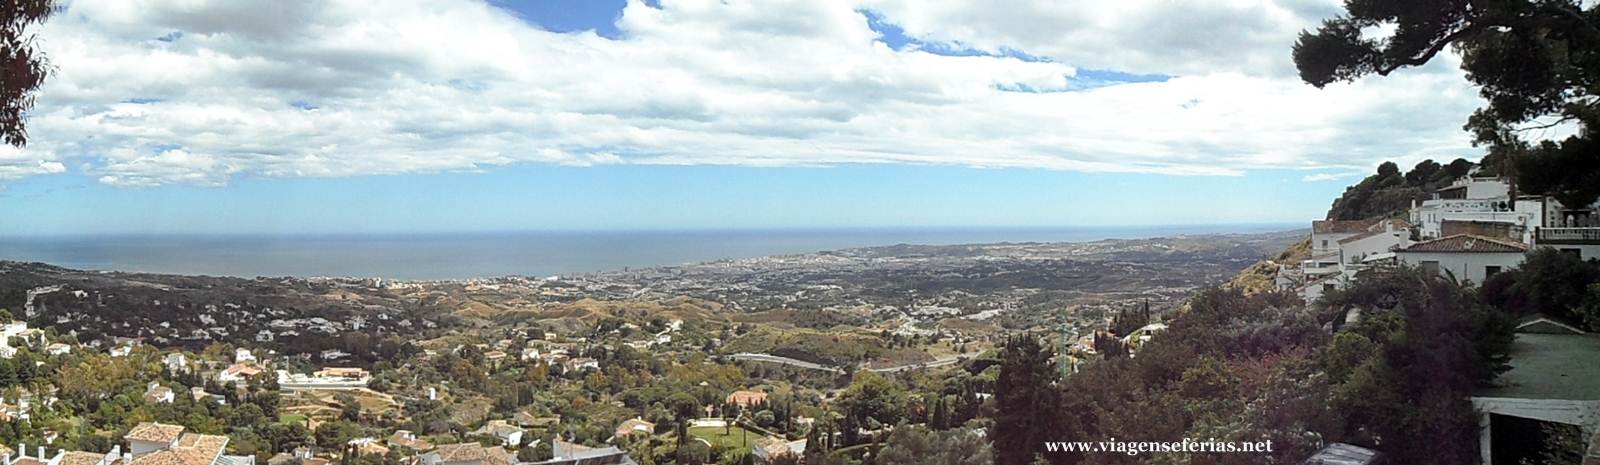 Vista Panoramica desde Mijas